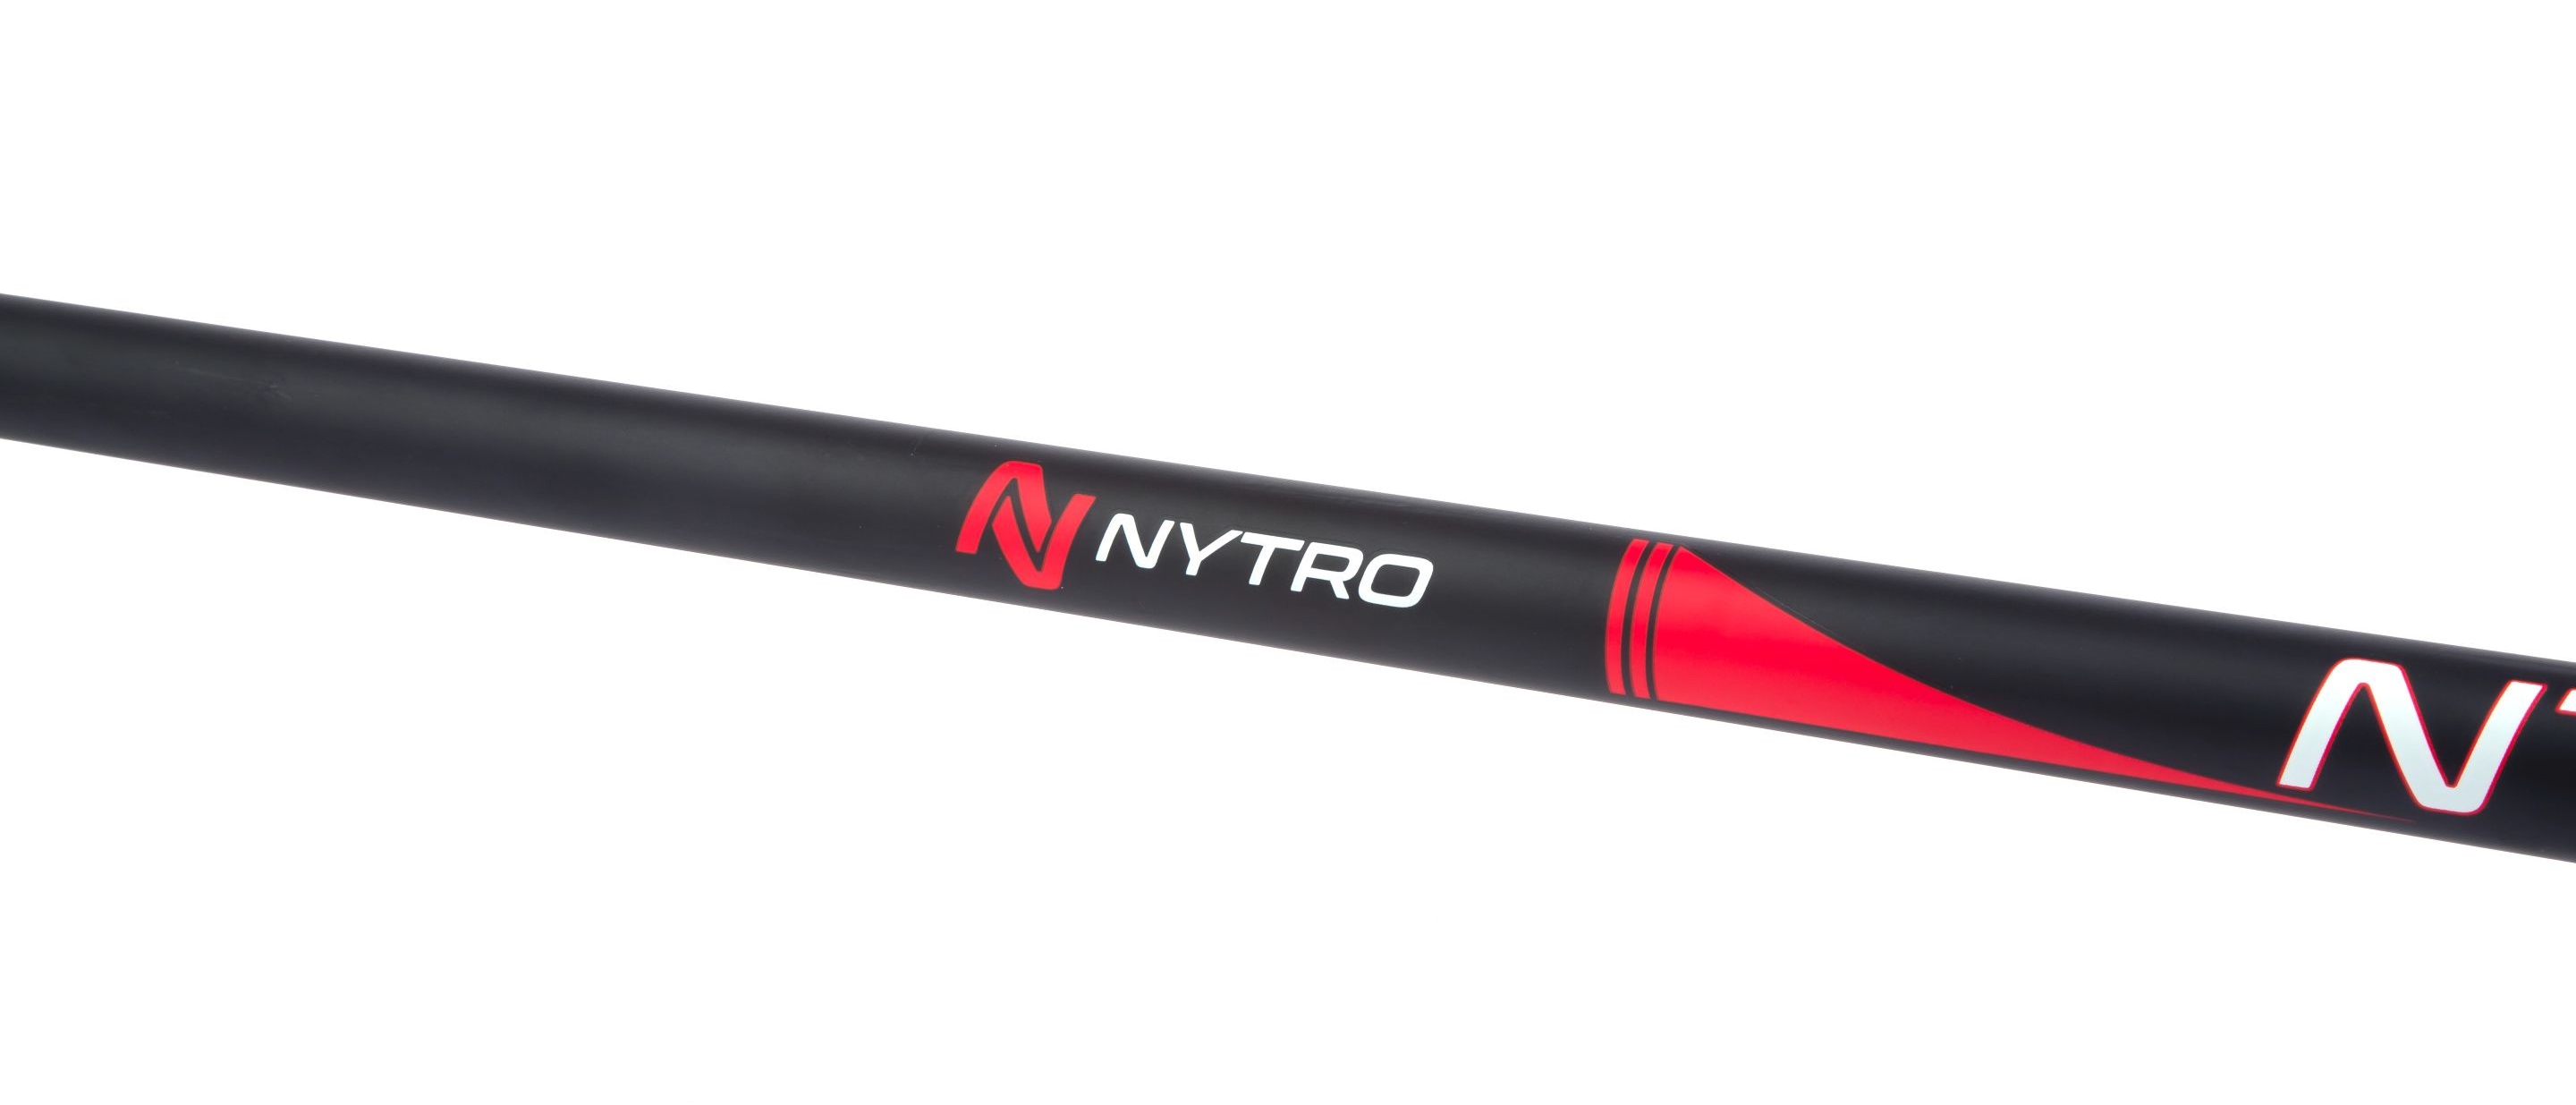 Nytro NTR Manico per Retino 300